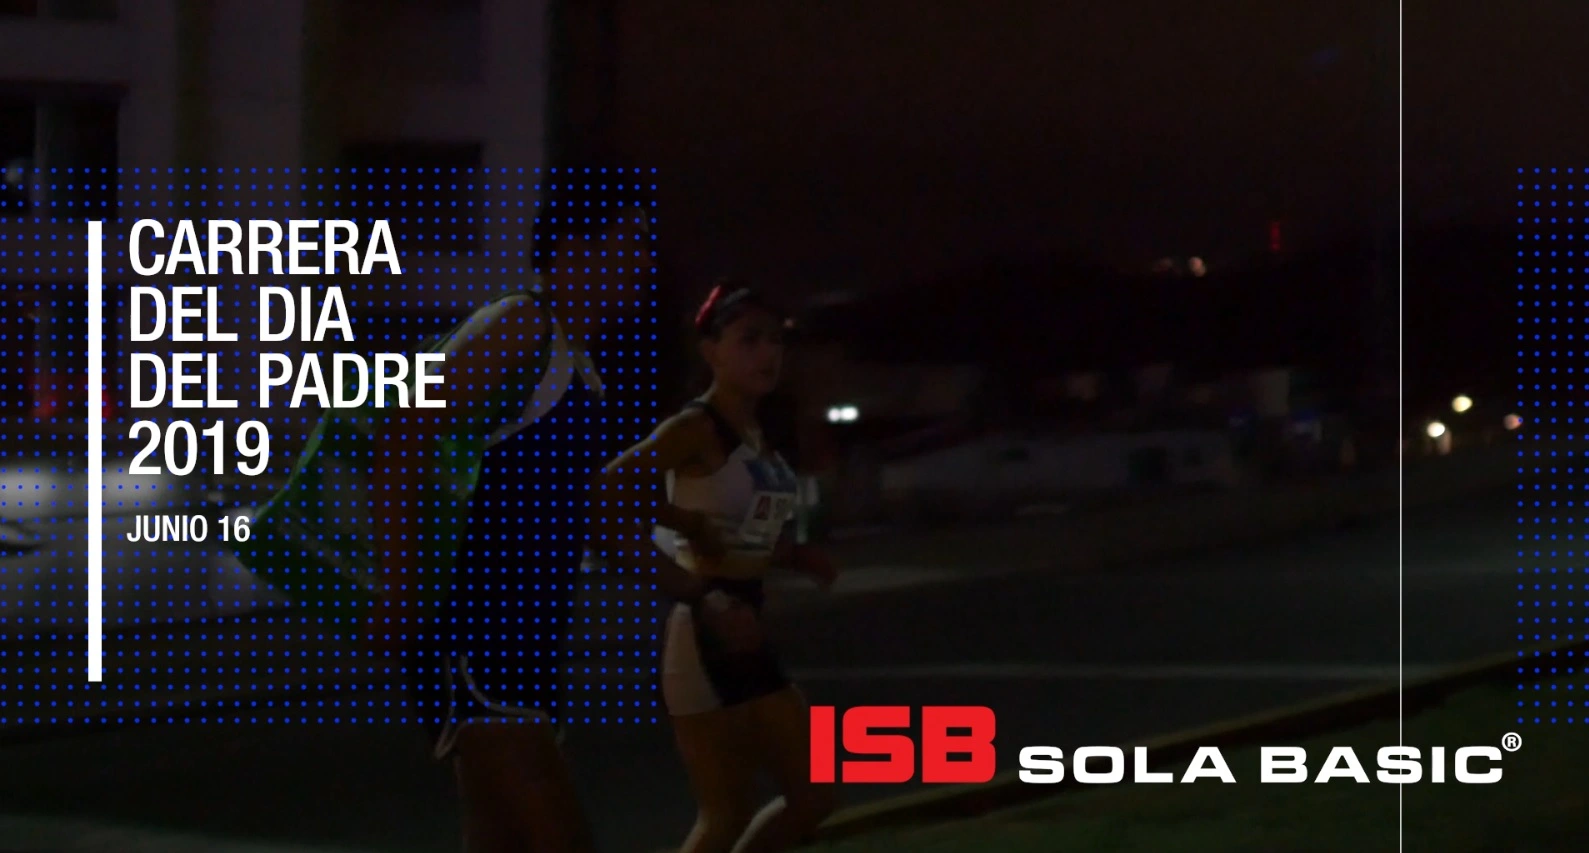 ISB Sola Basic impulsando deportistas, iluminando tu camino paso a paso